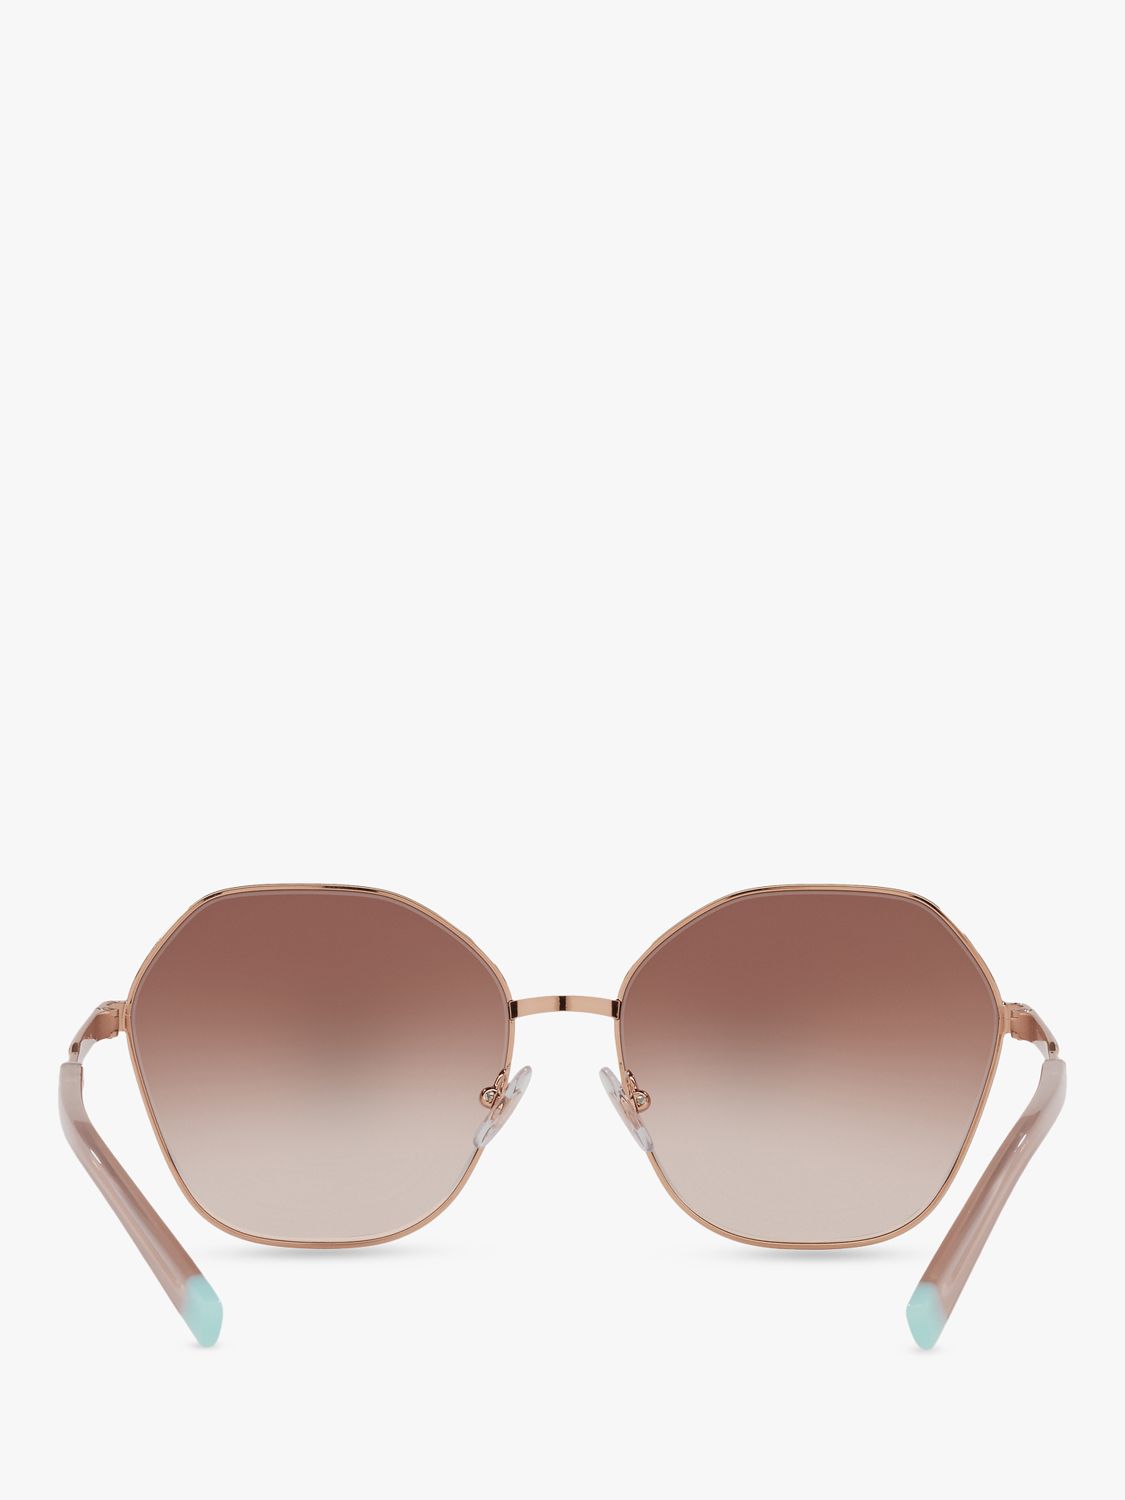 Tiffany & Co TF3081 Women's Irregular Sunglasses, Gold/Pink Gradient